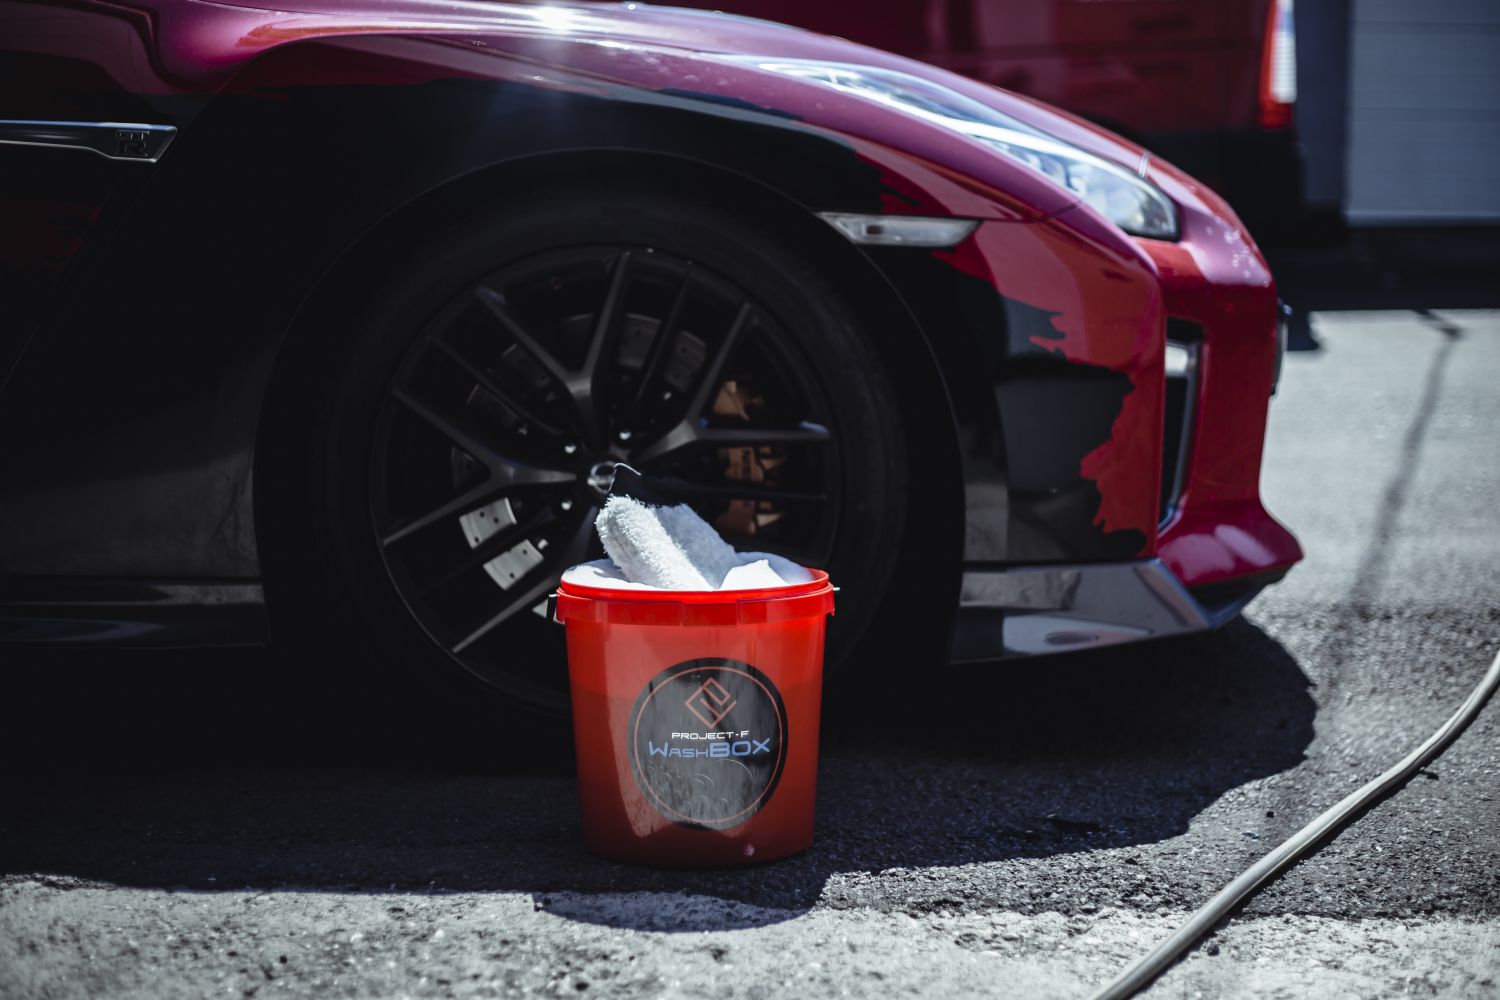 Project F - Washbox bucket - Nissan GTR